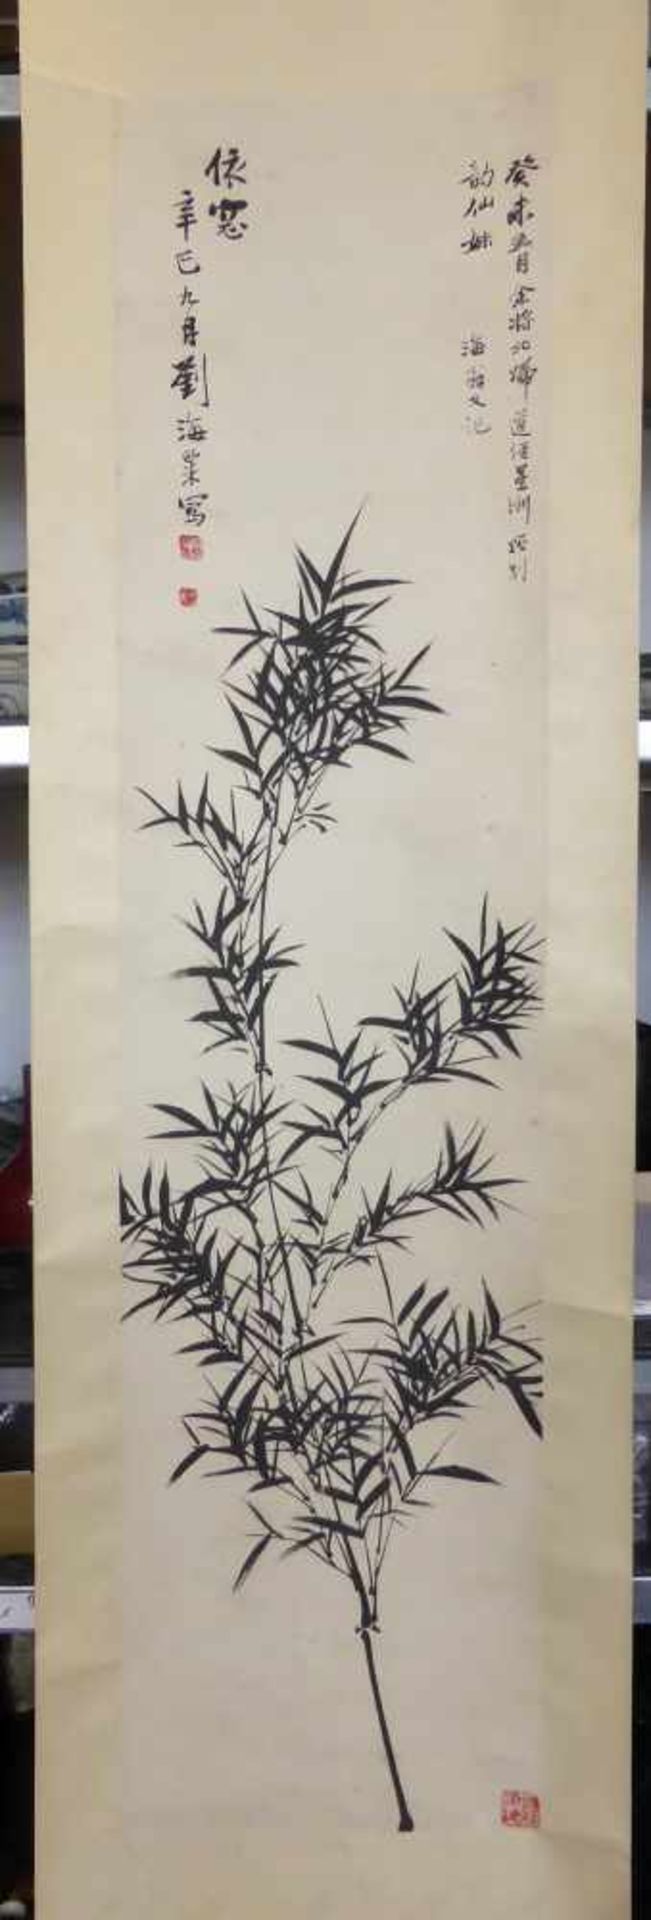 LIU, HAISU1896 Shangzhou - 1994. Bamboo. China. 1941 resp. 1943. Ink on paper. 136x33.5cm. . - Bild 2 aus 3